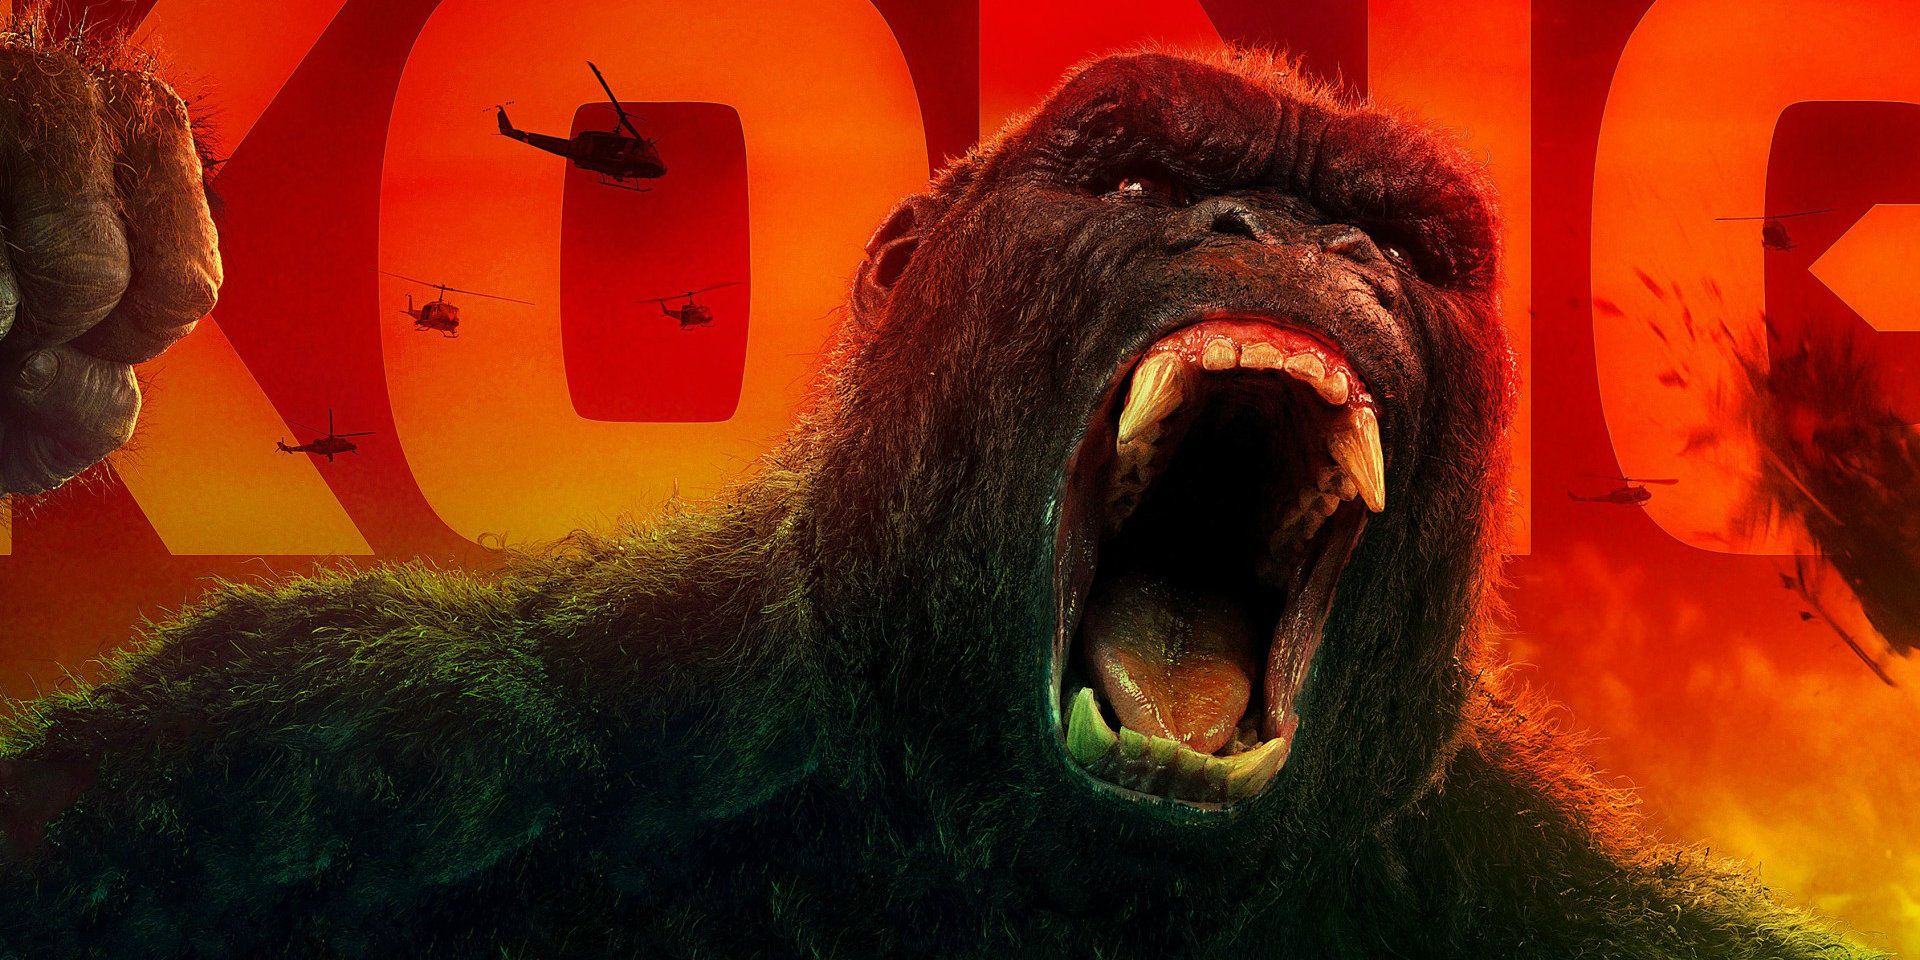 Kong: Skull Island banner